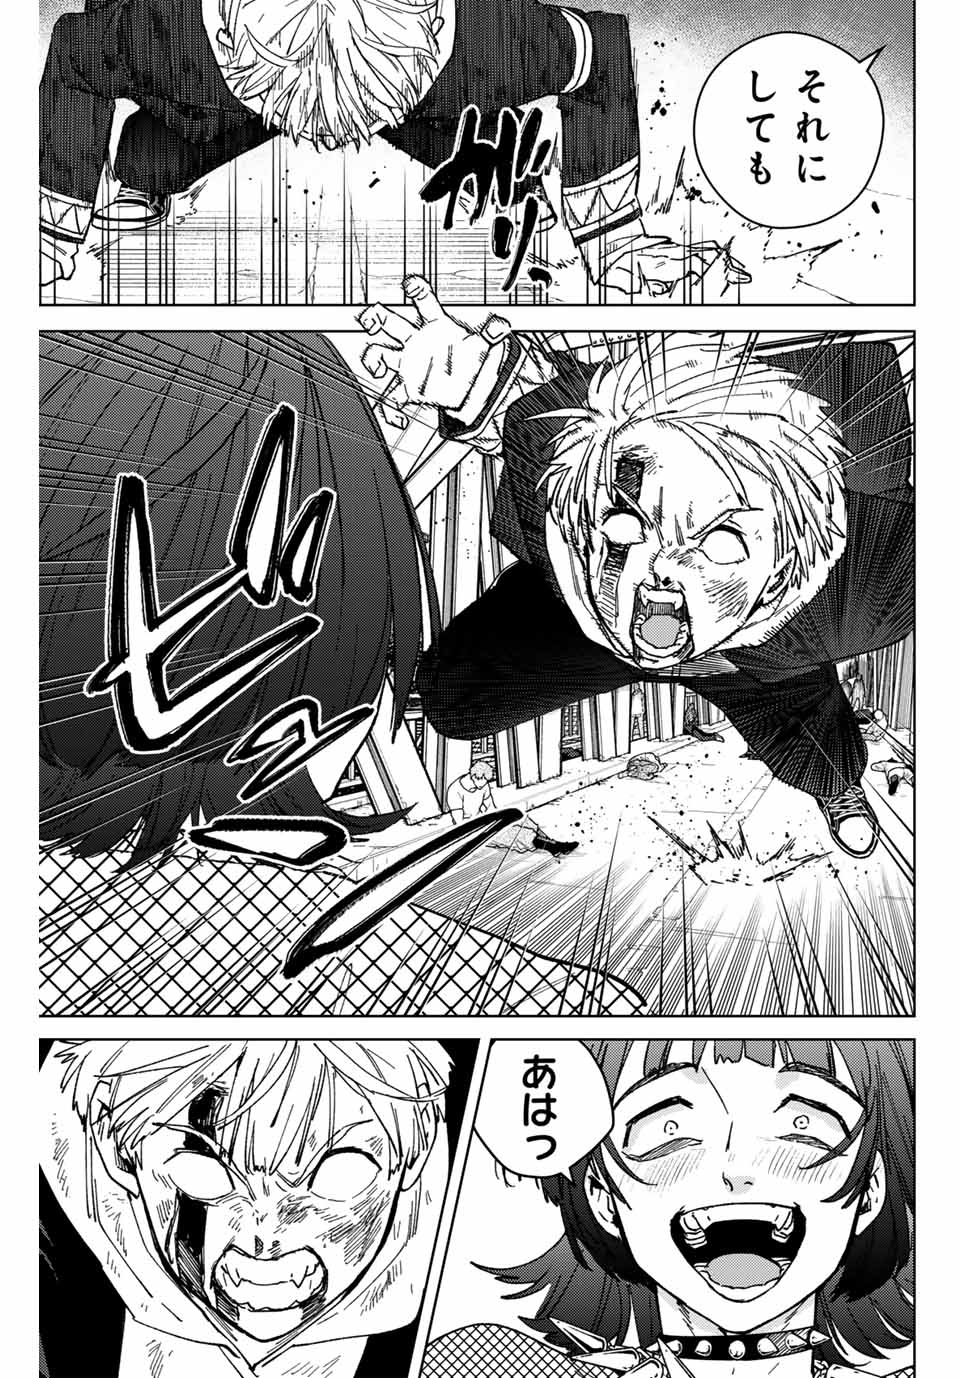 Wind Breaker (NII Satoru) - Chapter 125 - Page 3